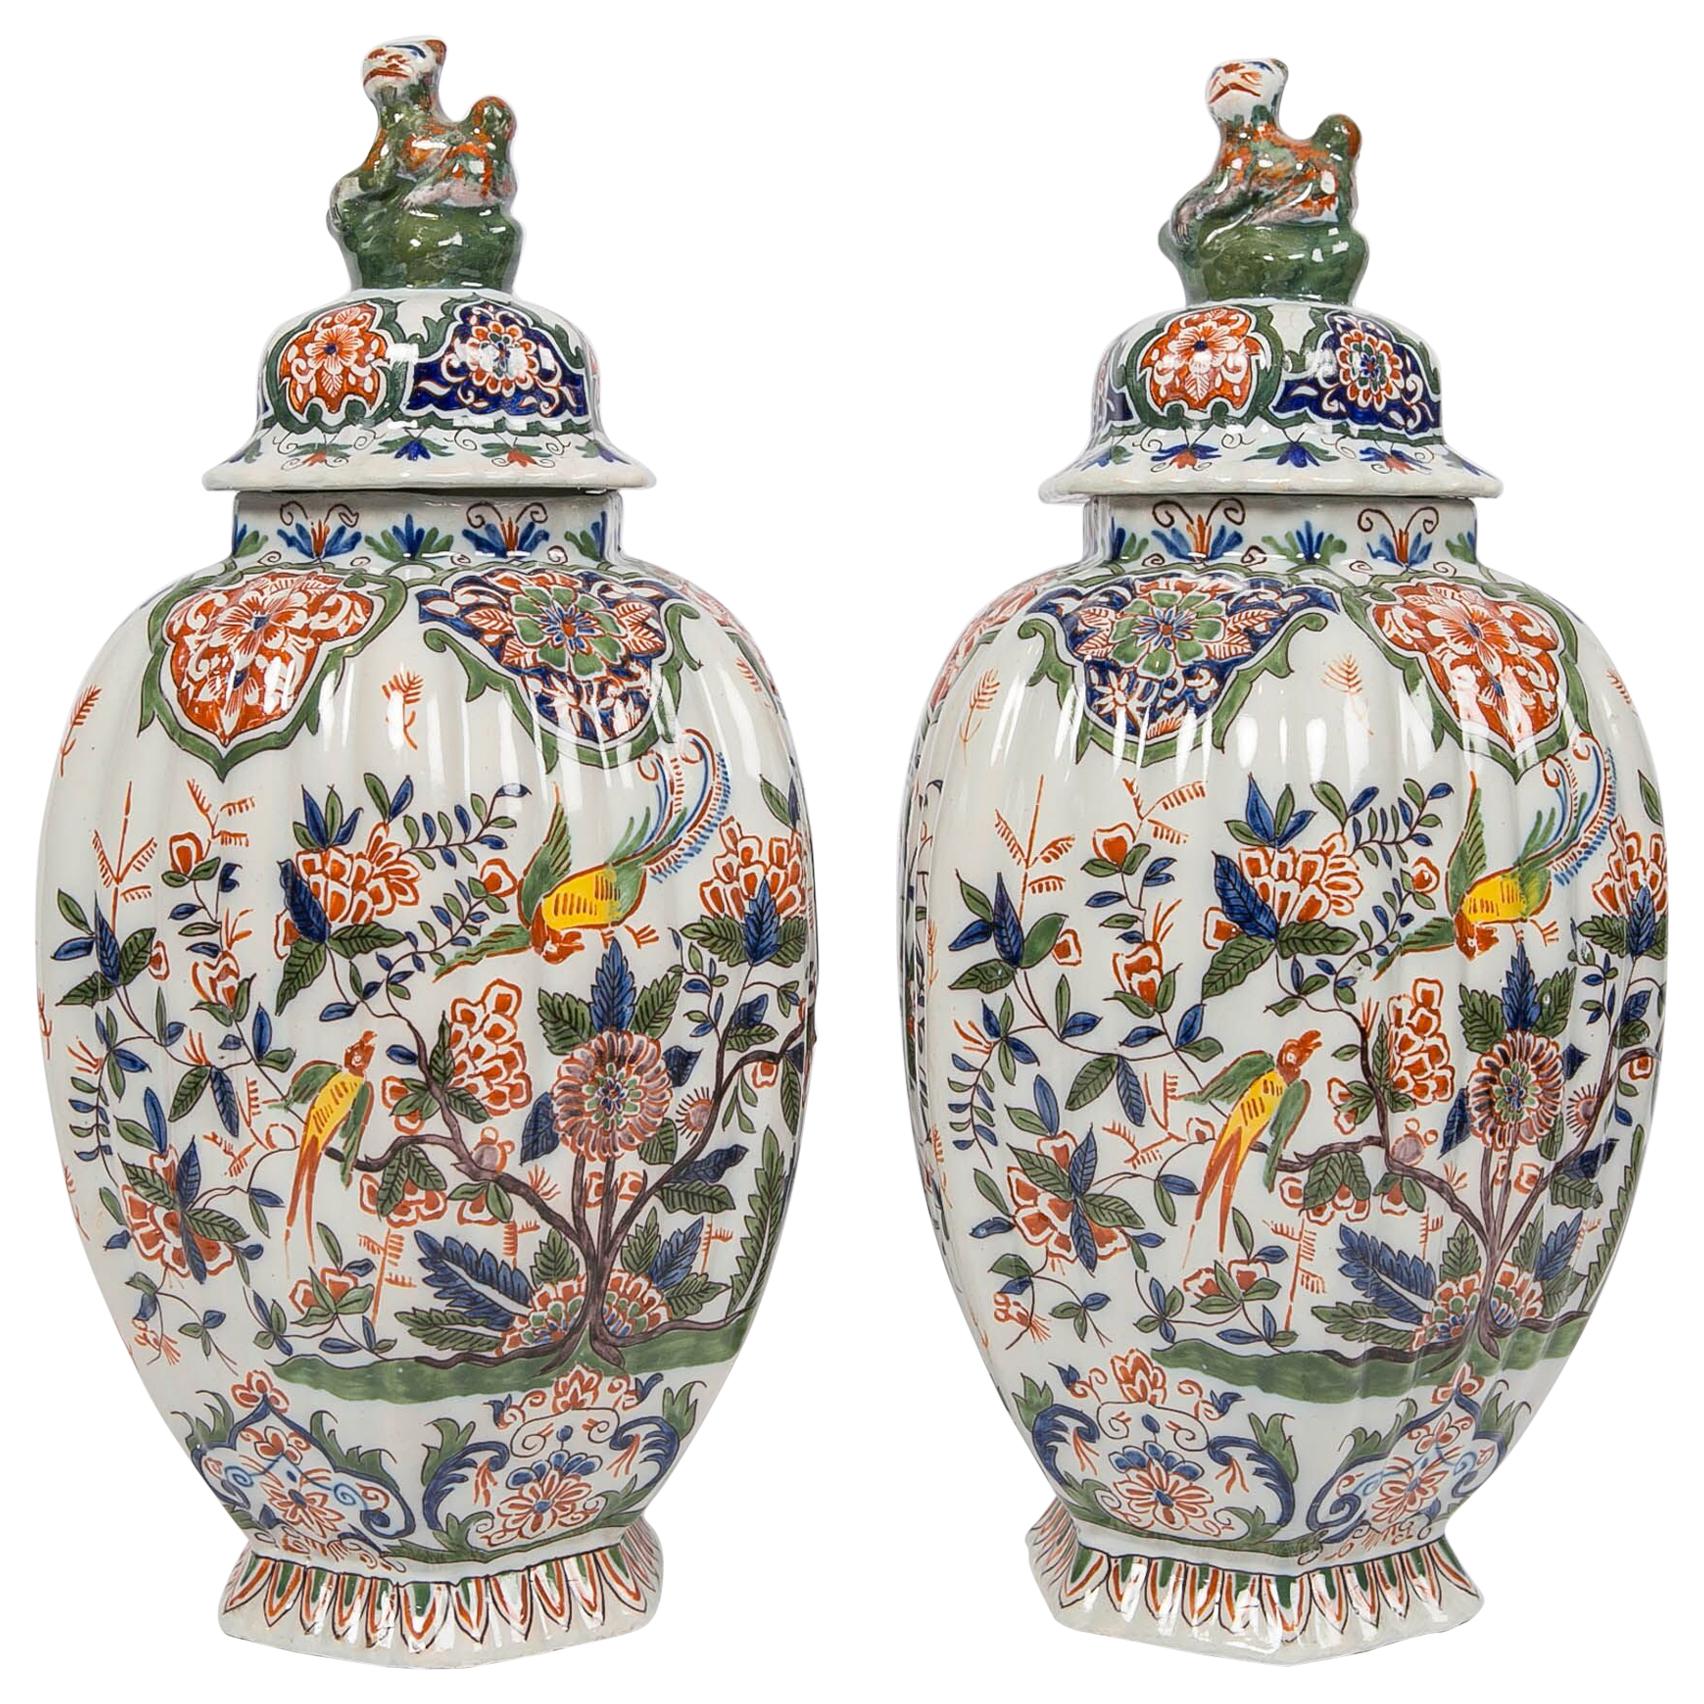 Pair of Colorful 19th Century Dutch Delft Jars Made, circa 1880